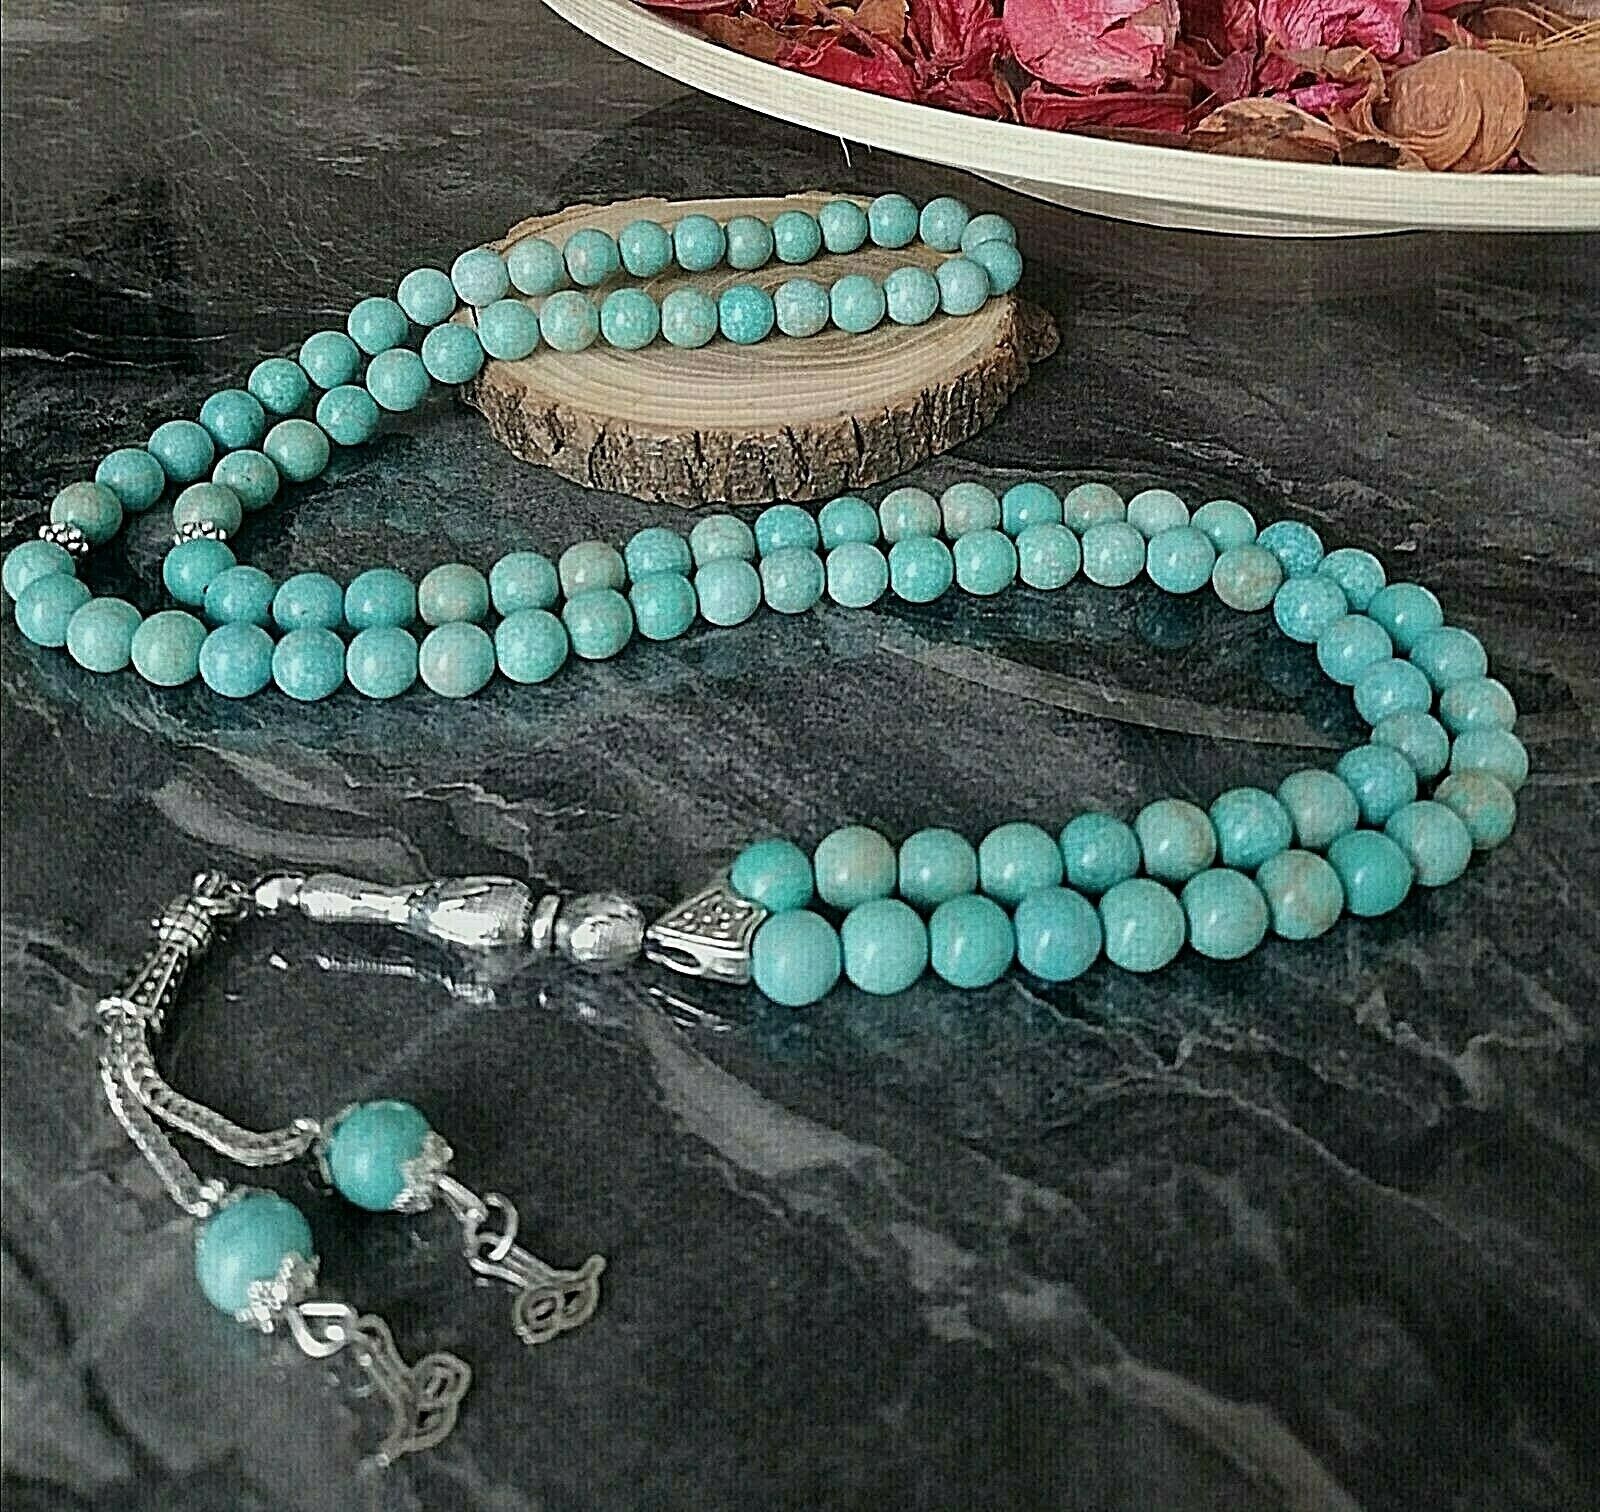 Turquoise Firuza Stone Islamic Prayer 99 beads Tasbih Misbaha Tasbeeh Rosary 8mm